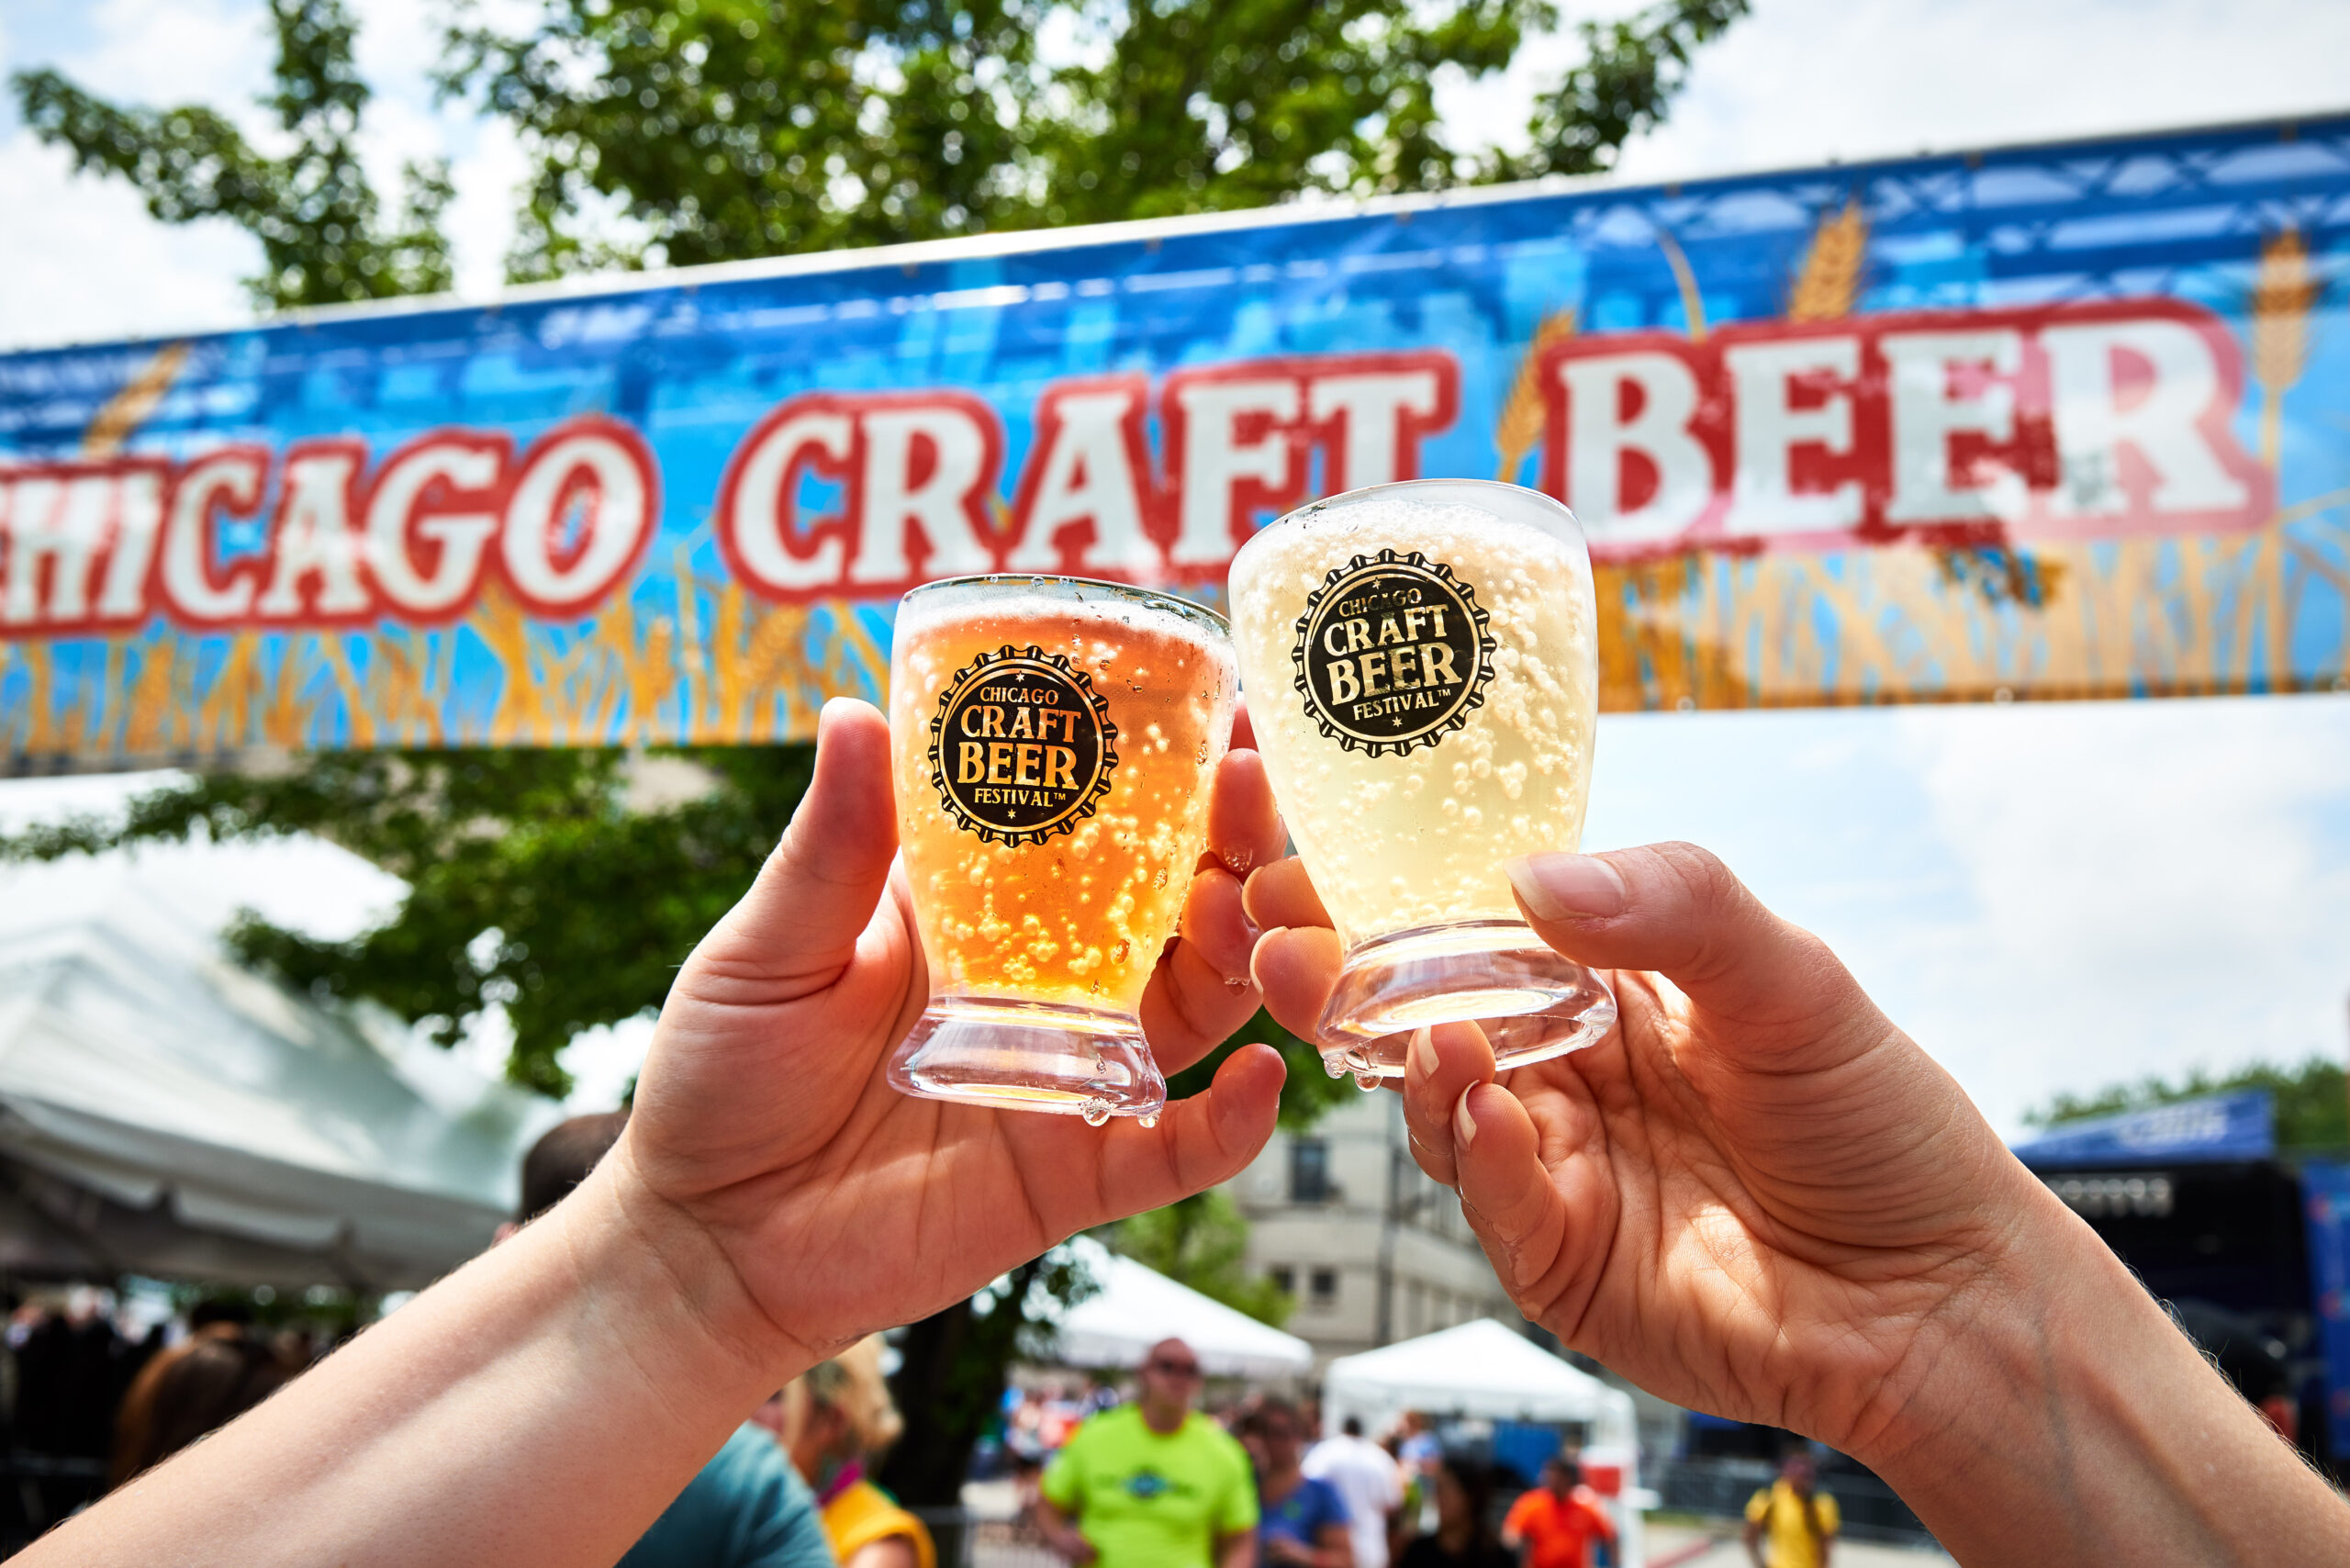 Chicago Craft Beer Fest Special Events Management